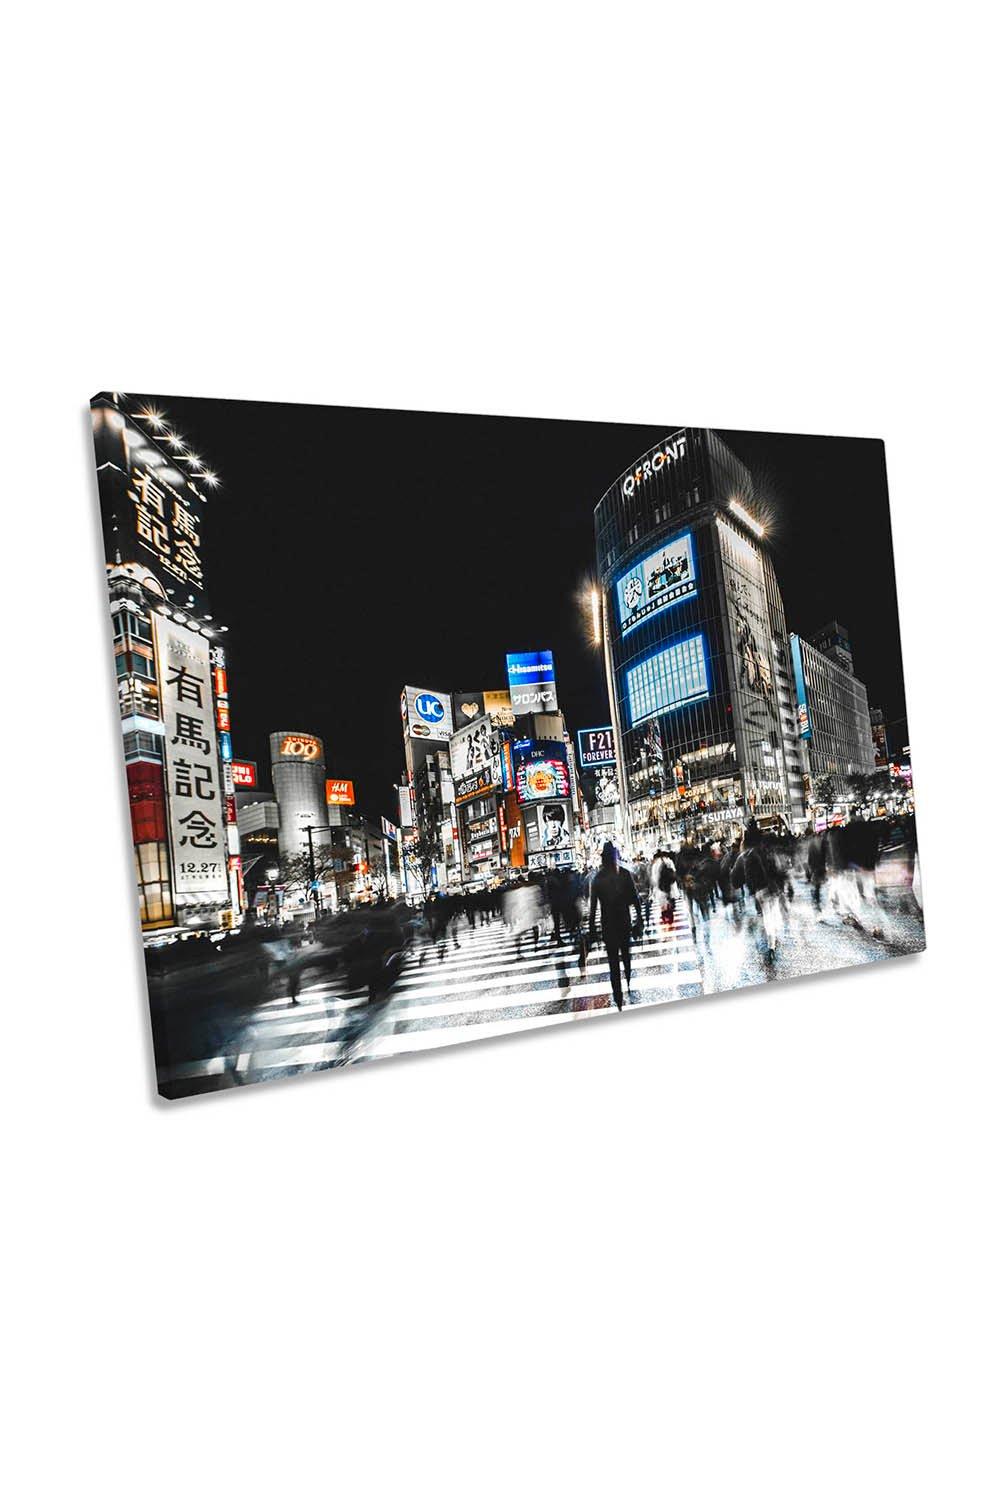 Shibuya Crossing Tokyo City Japan Canvas Wall Art Picture Print